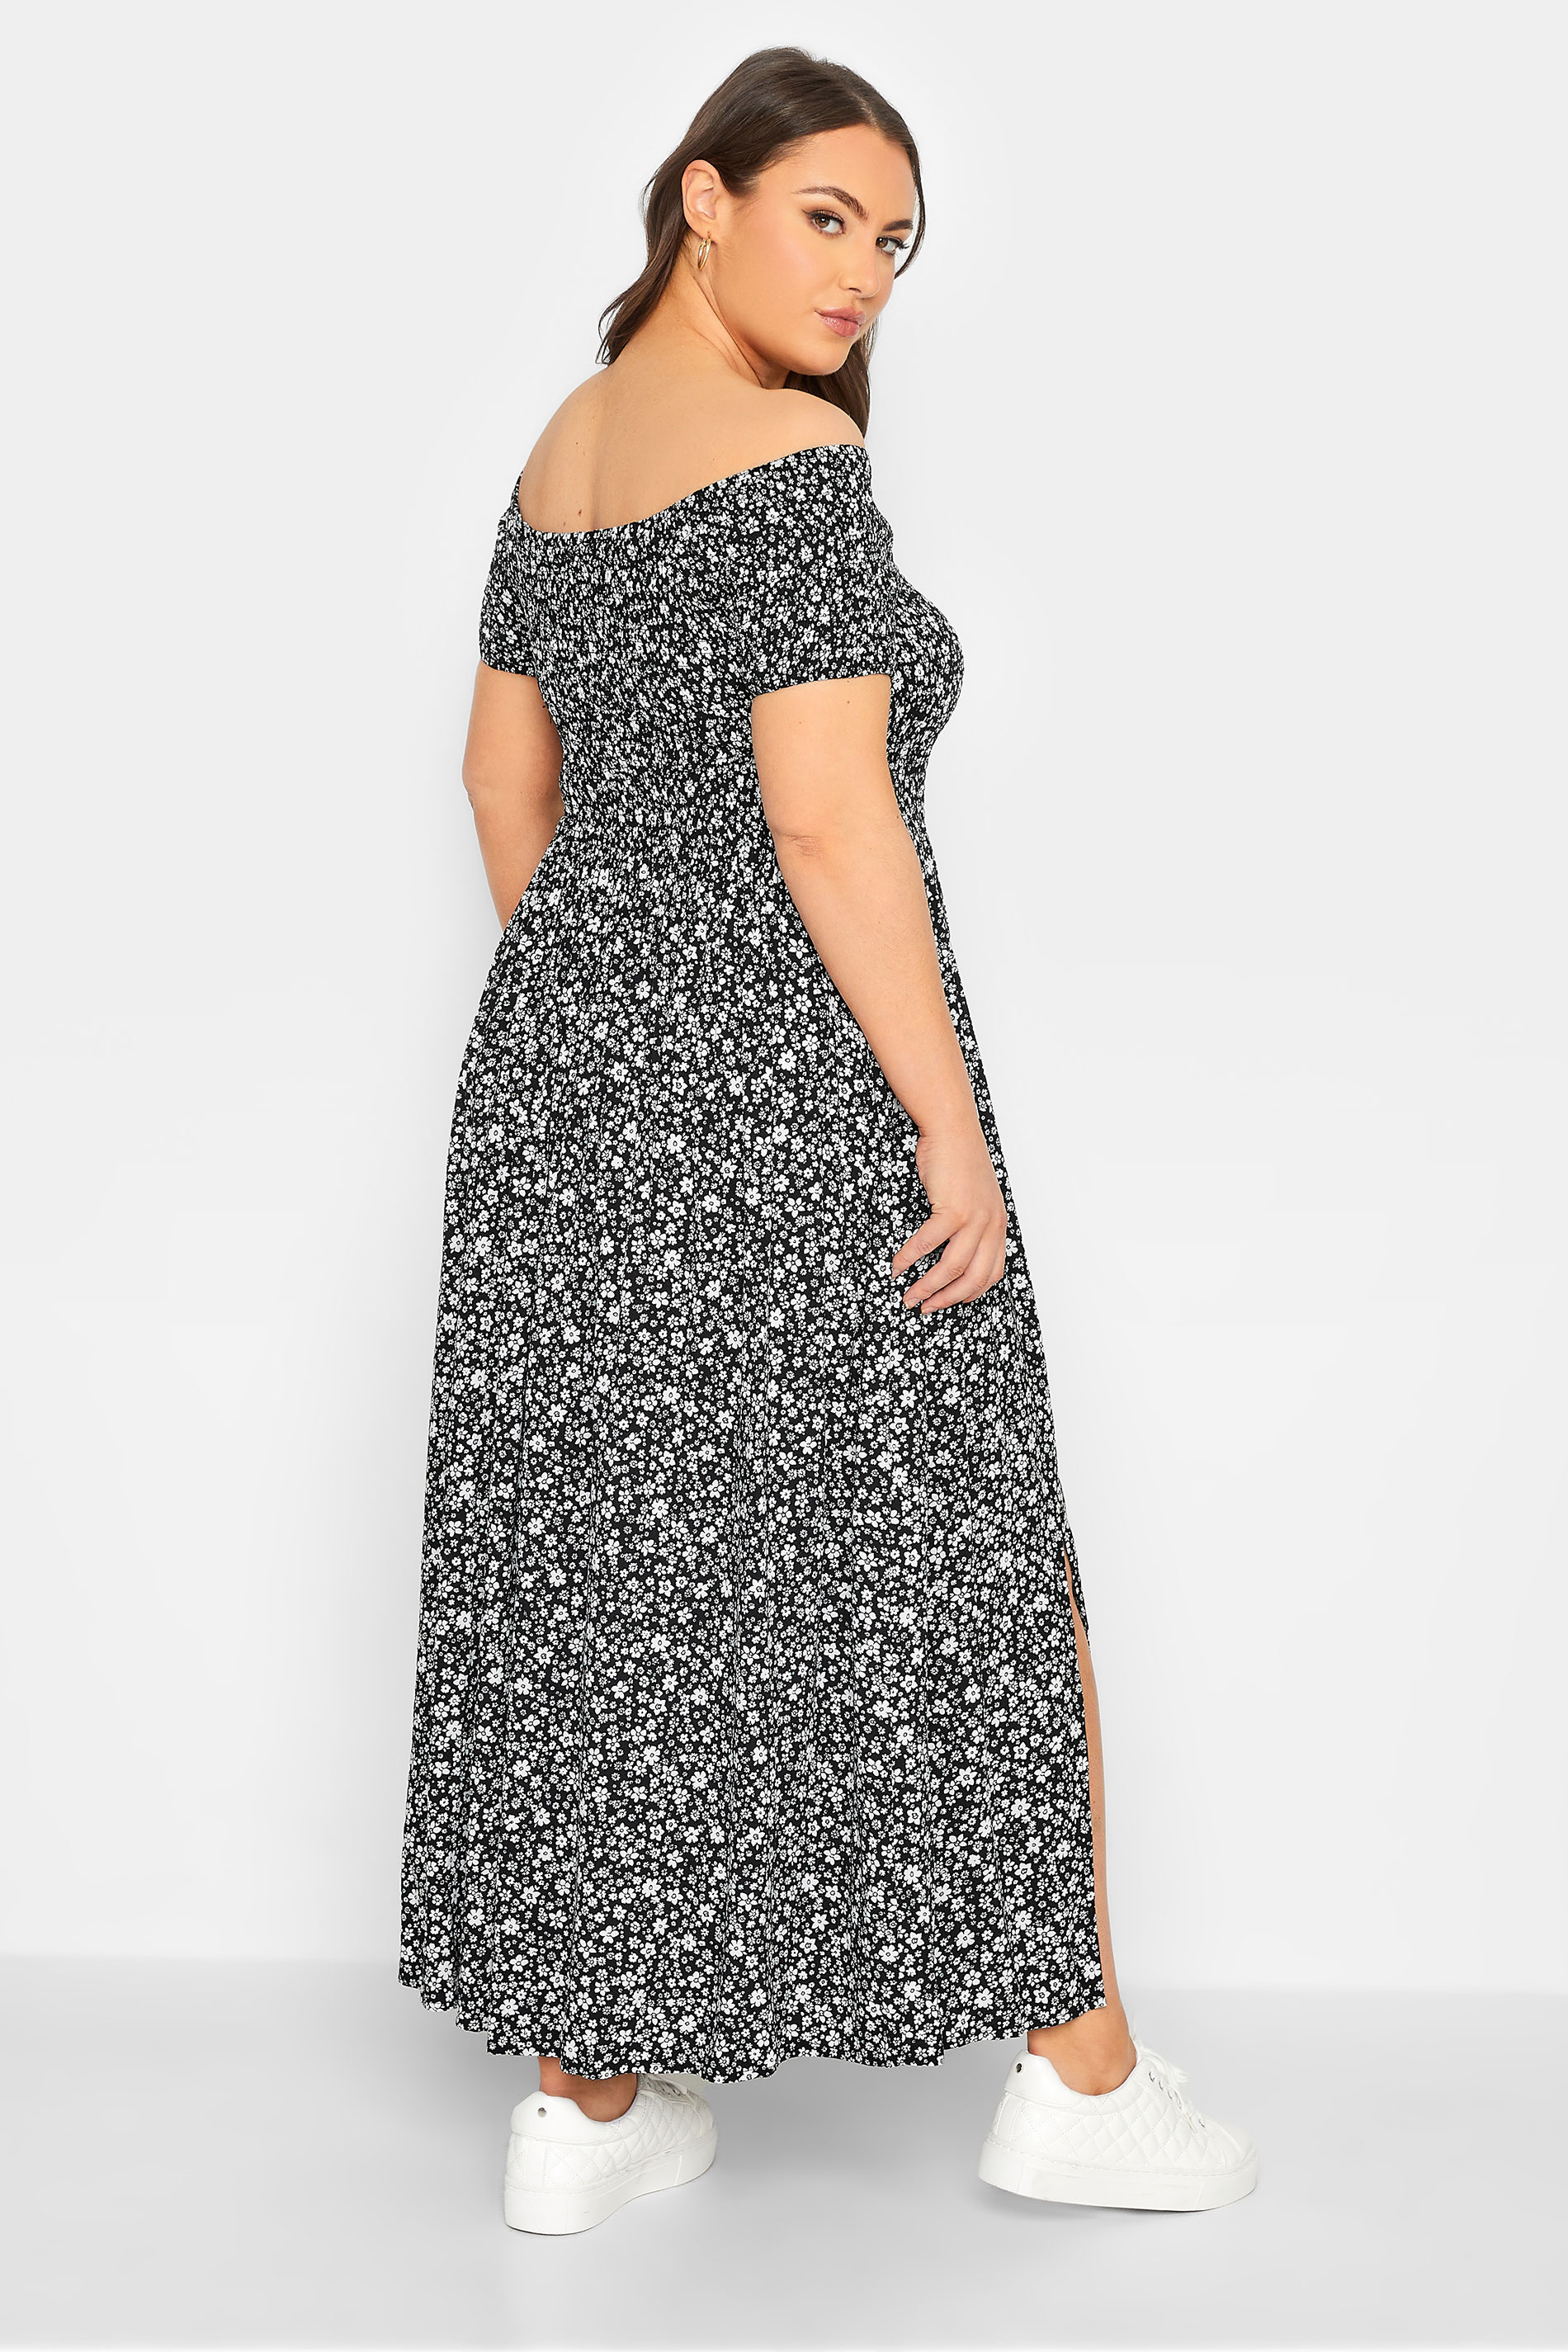 Plus Size Black Floral Shirred Bardot Maxi Dress | Yours Clothing 3